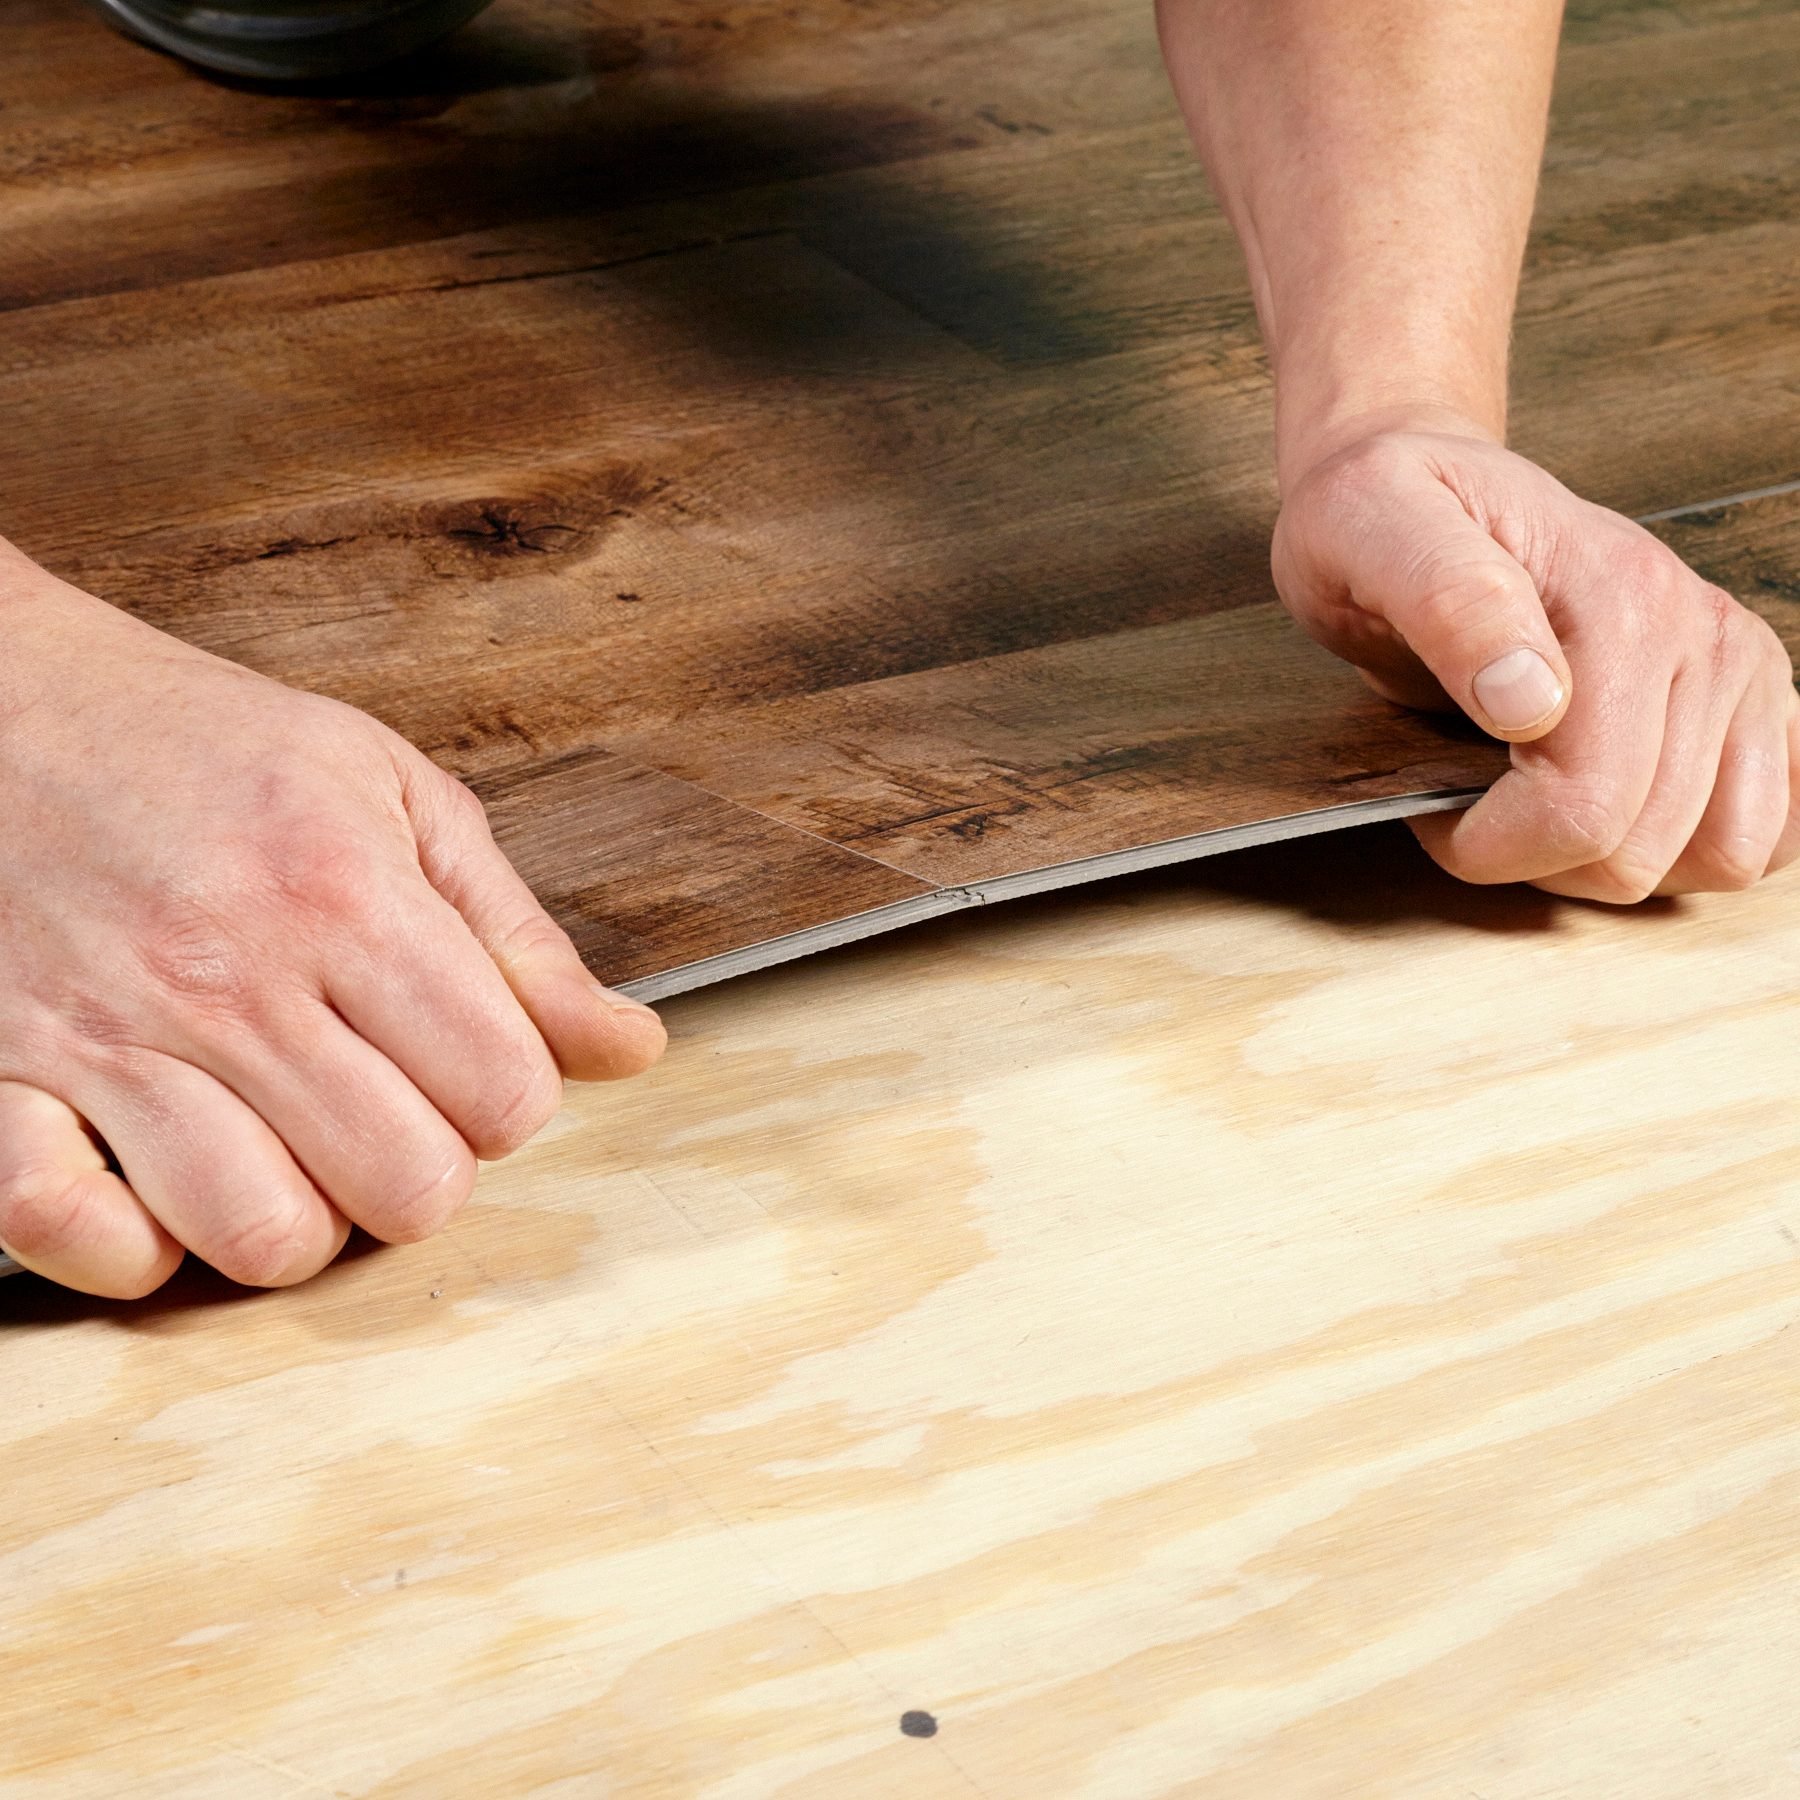 Installing Vinyl Plank Flooring - How To